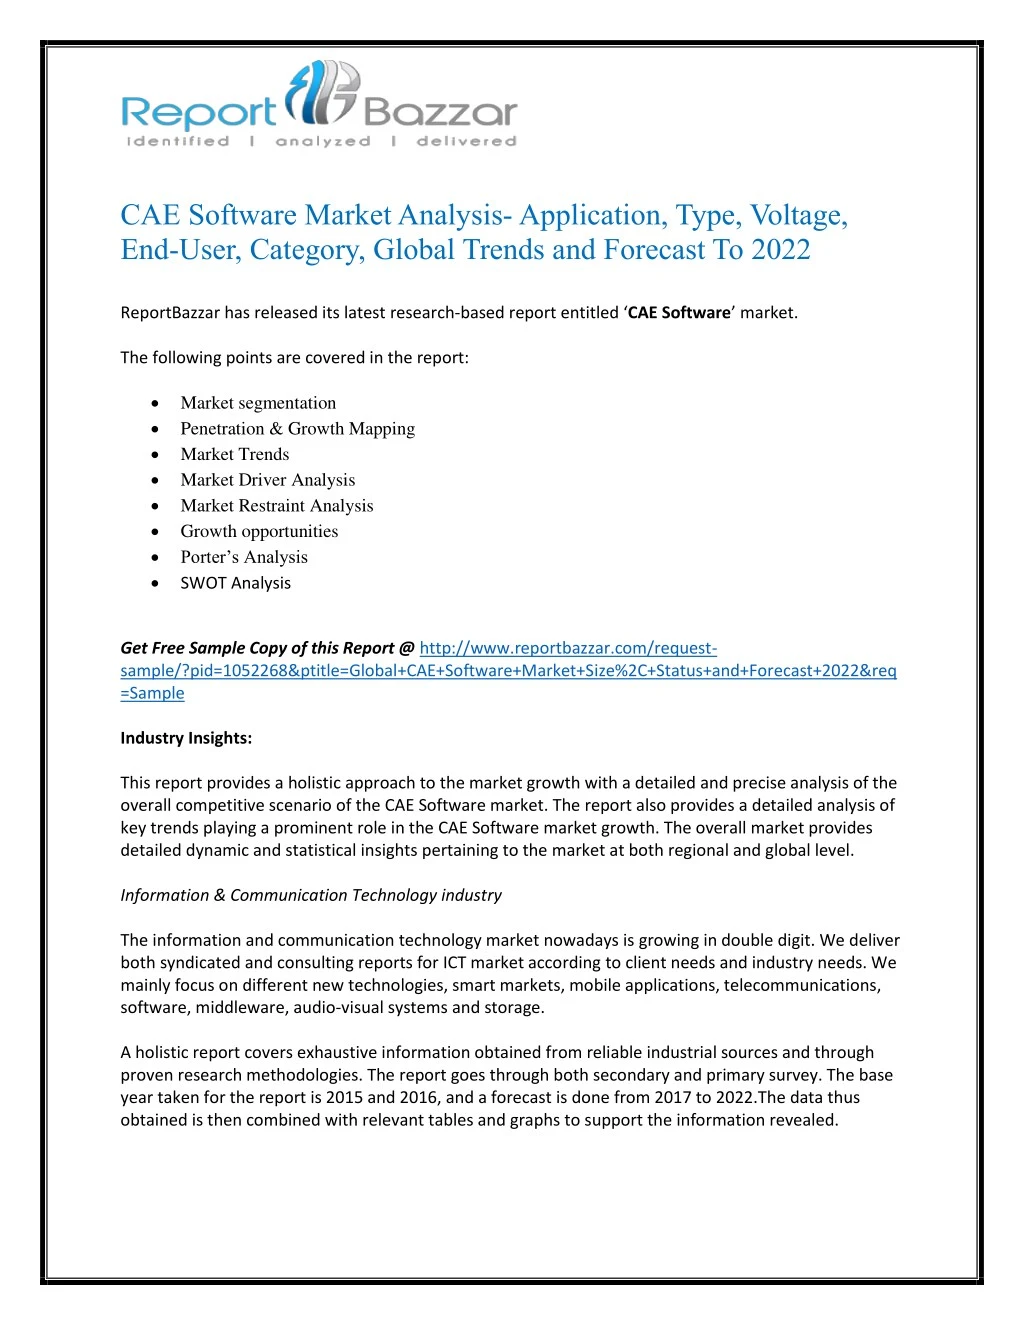 cae software market analysis application type